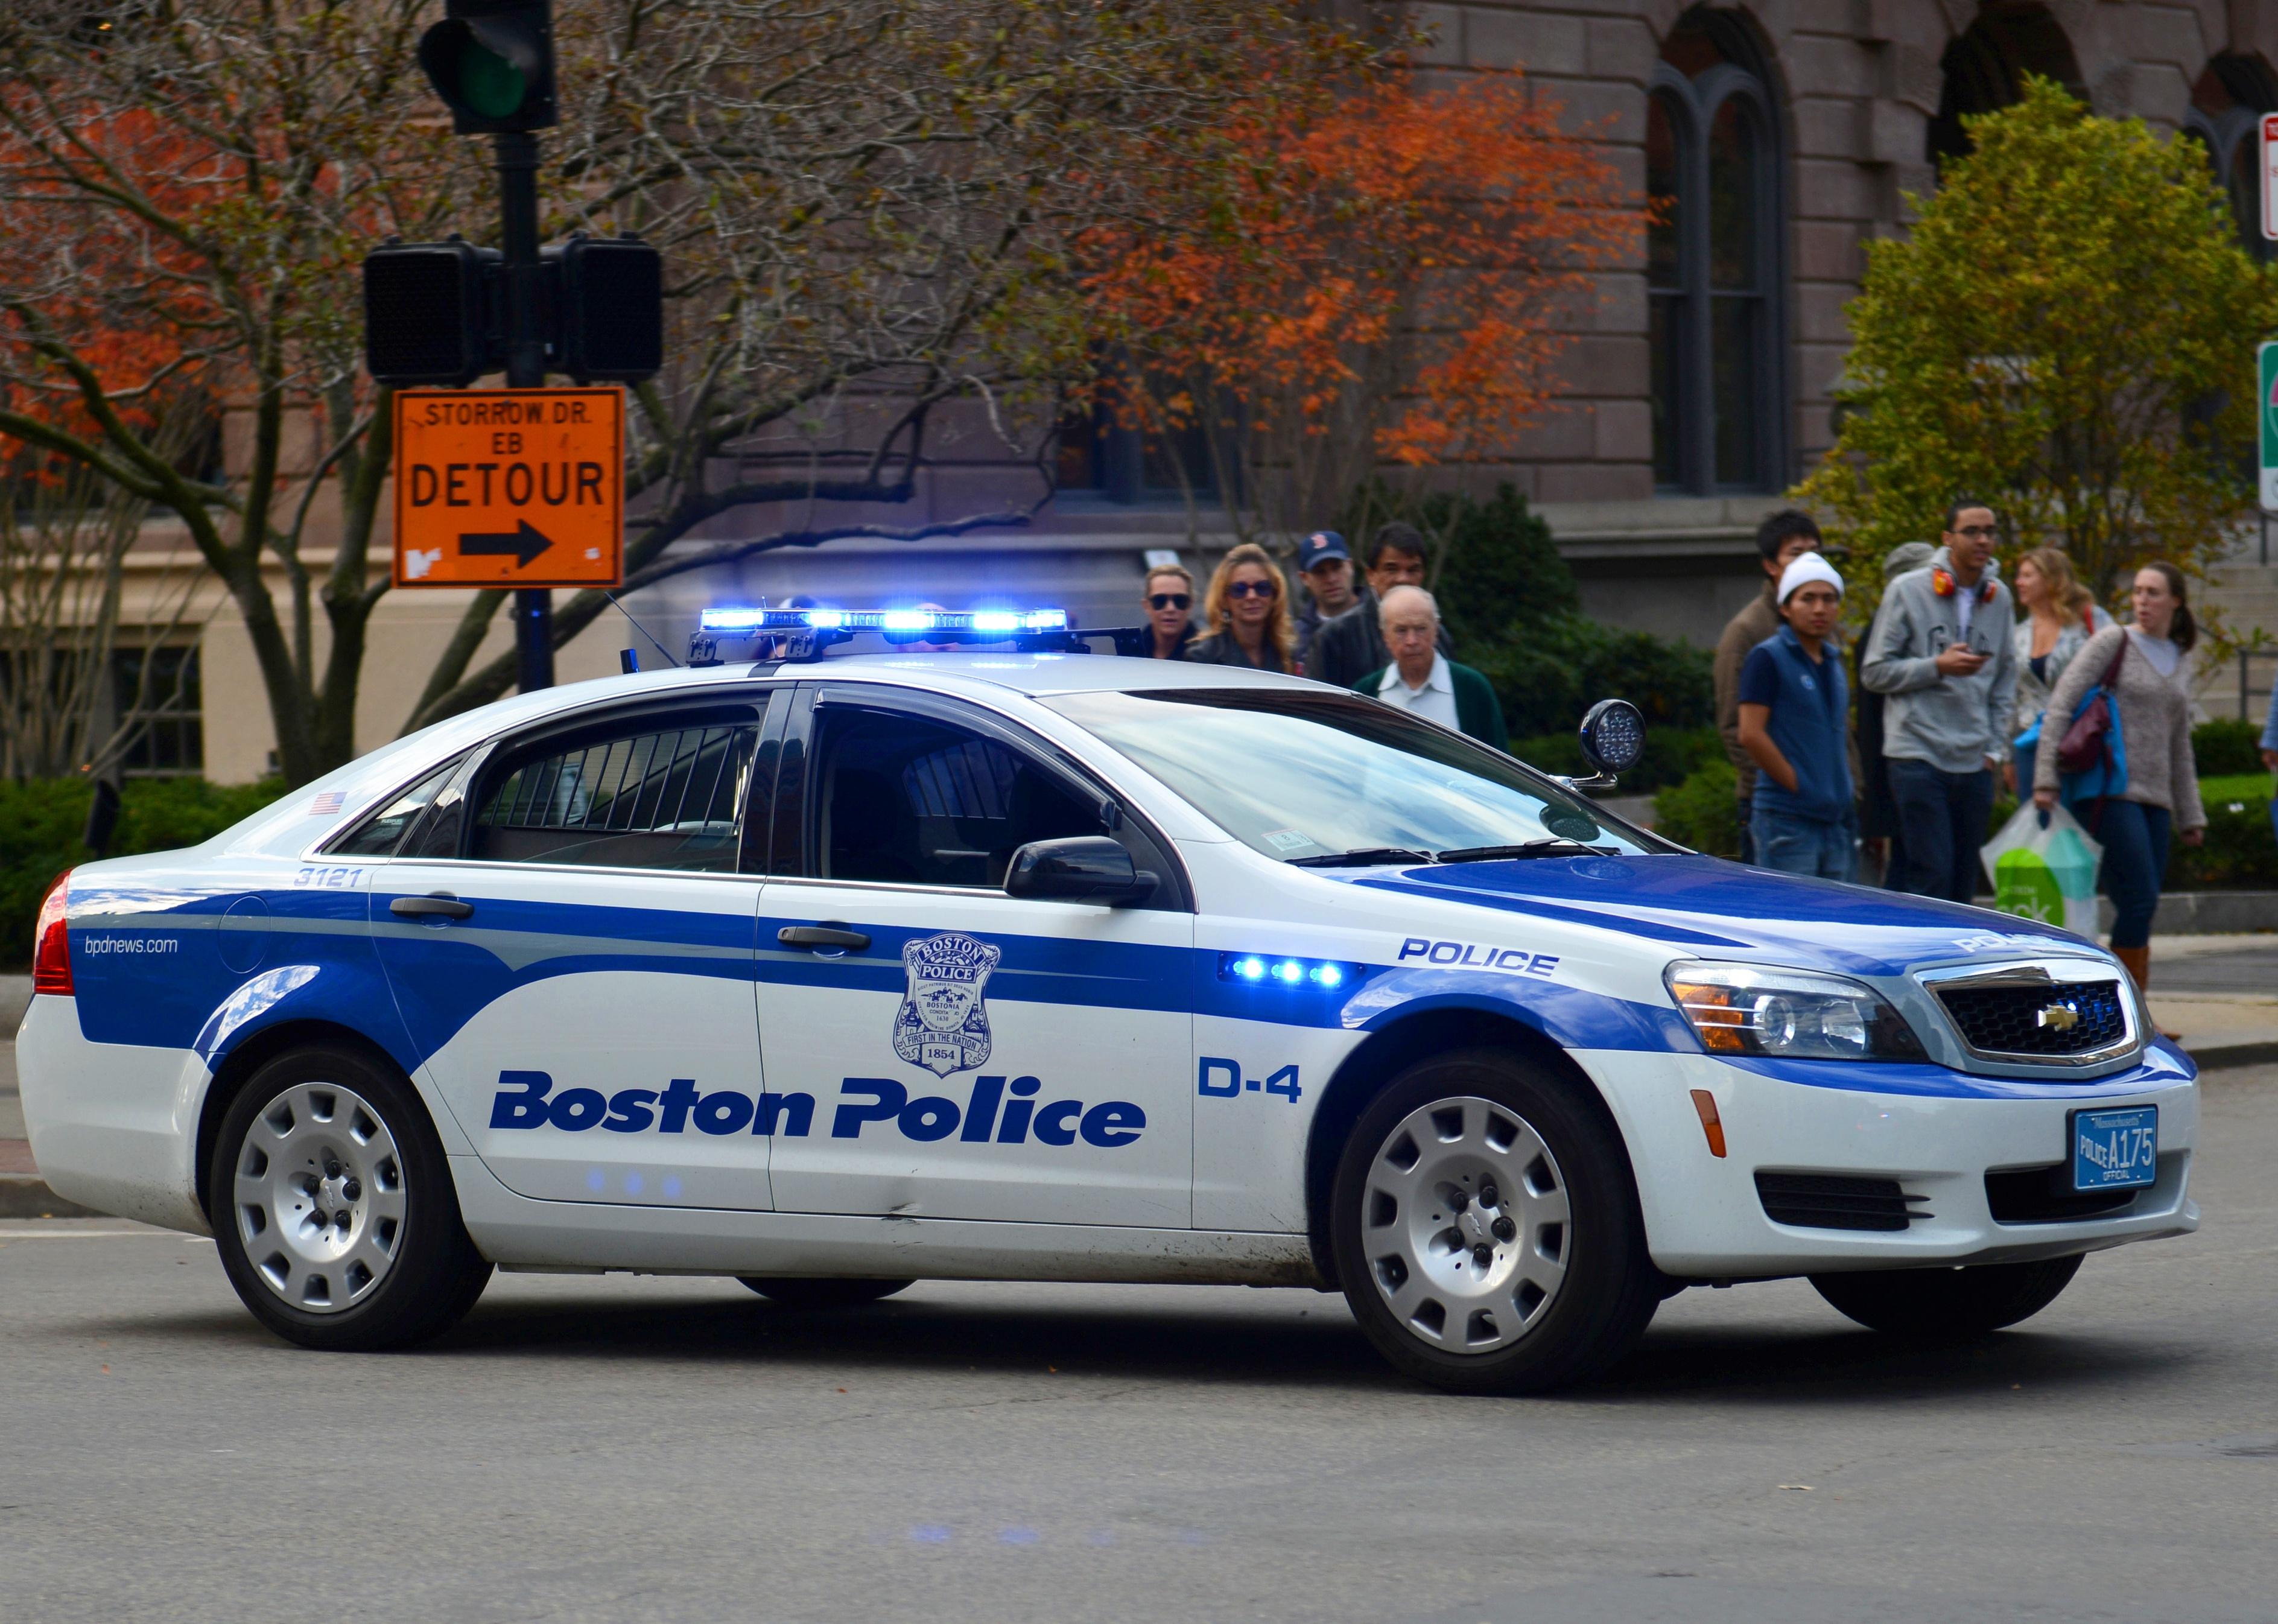 Boston Police Car on duty in downtown Boston.